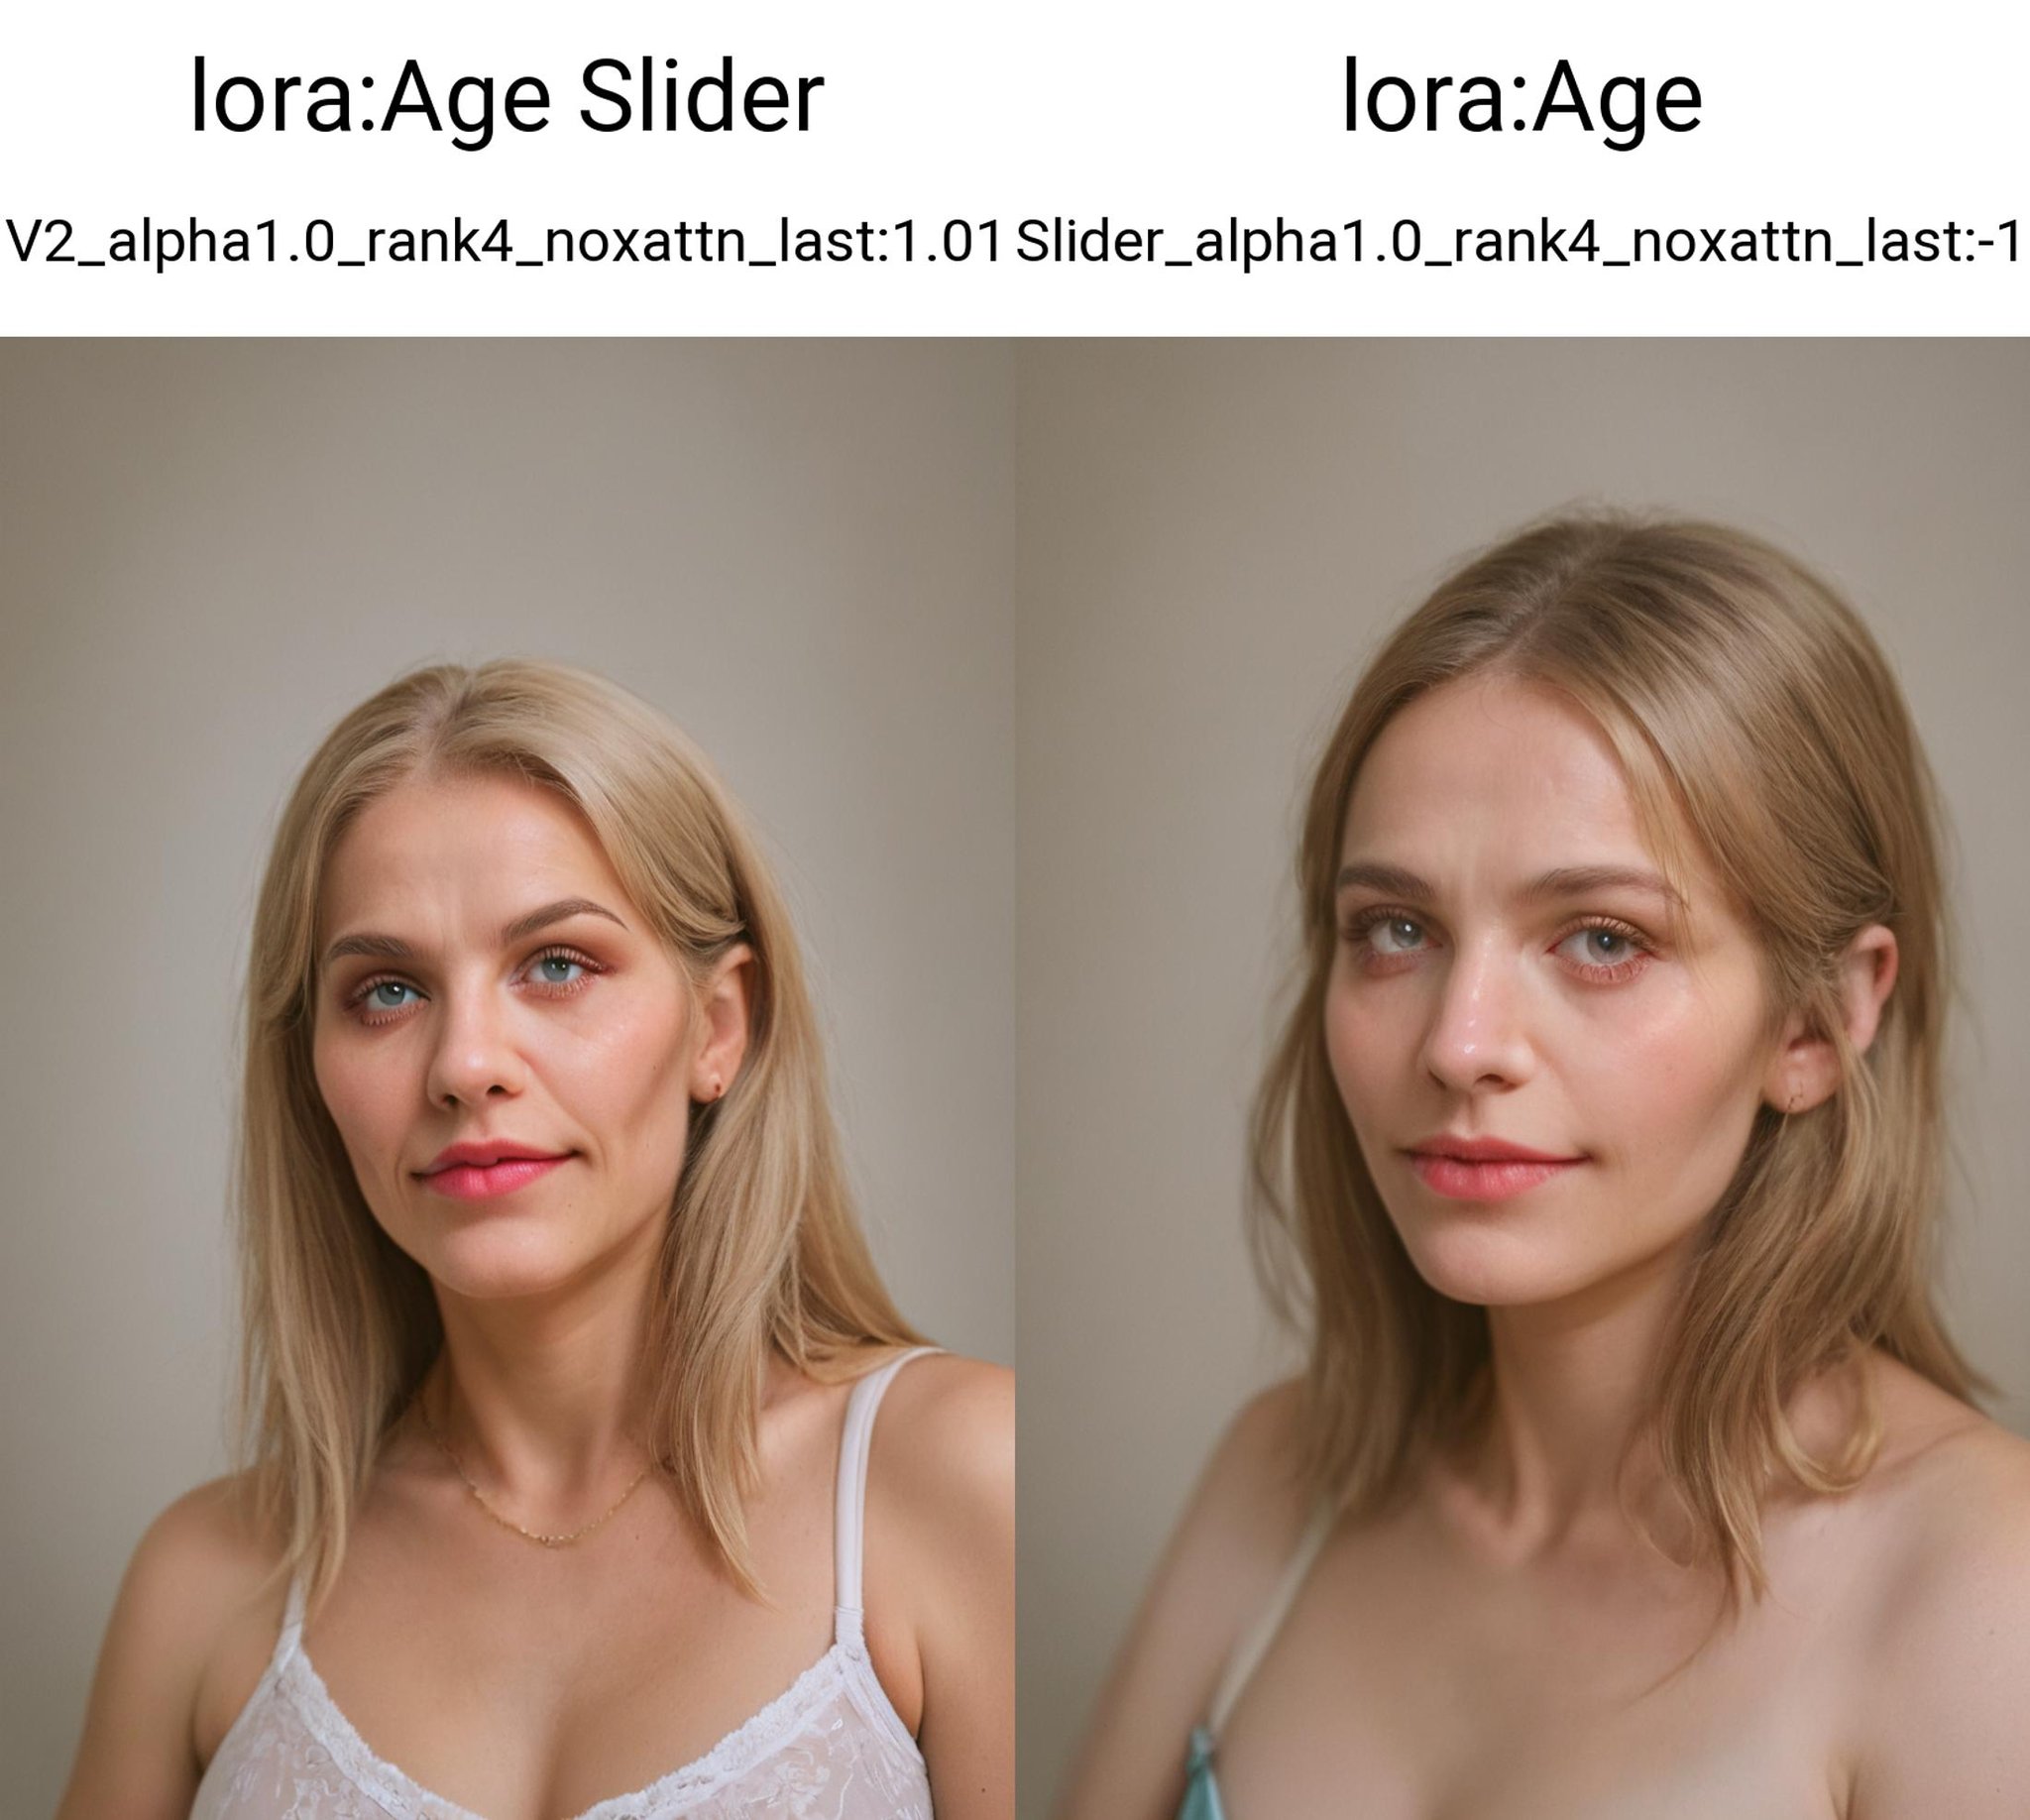 woman, <lora:Age Slider V2_alpha1.0_rank4_noxattn_last:1.01>, (portrait), 